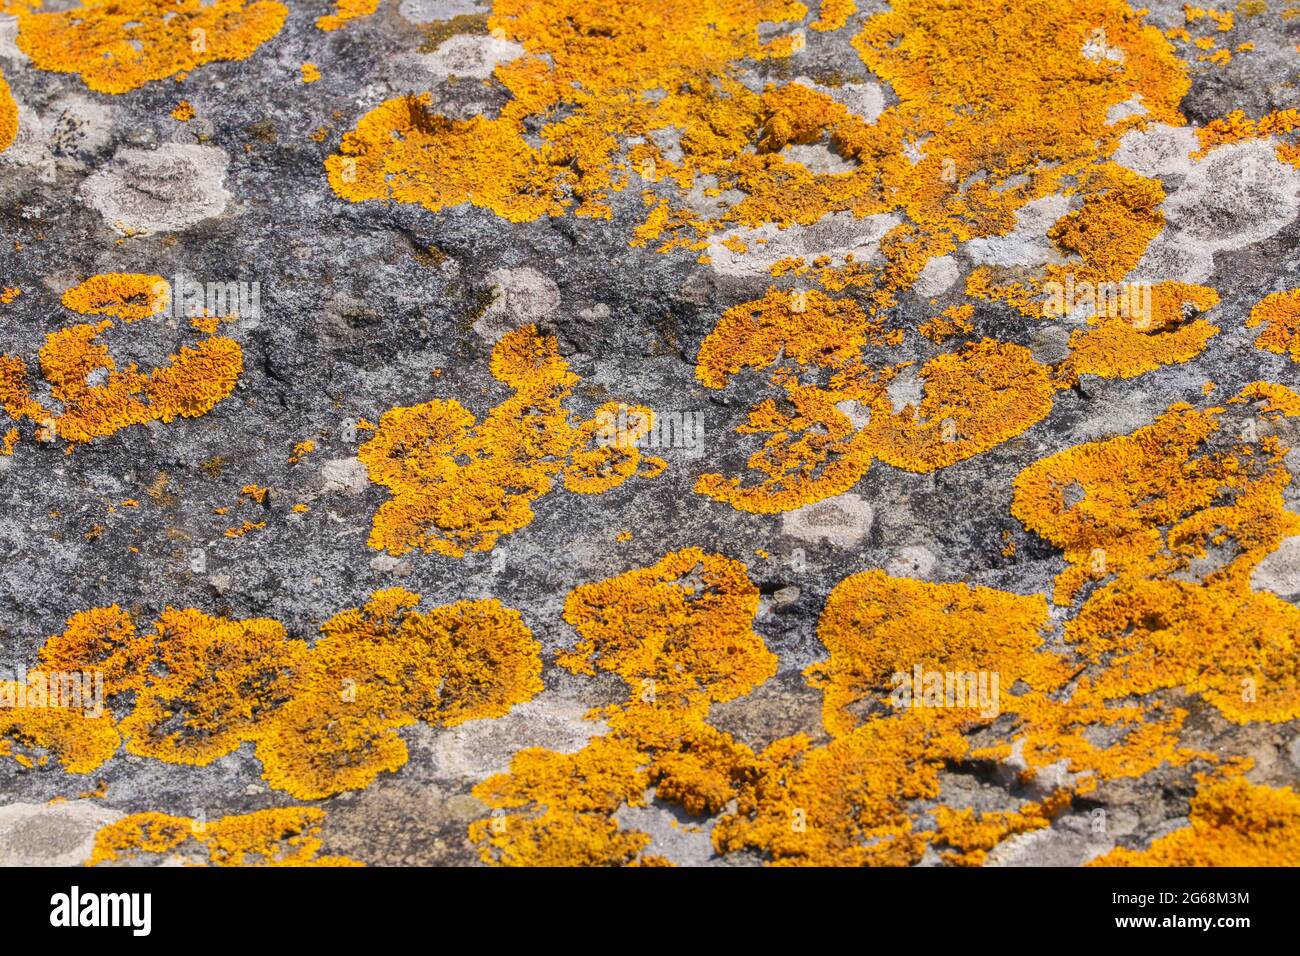 A mass of yellow lichen, Xanthoria parietina, growing on rocks. Stock Photo